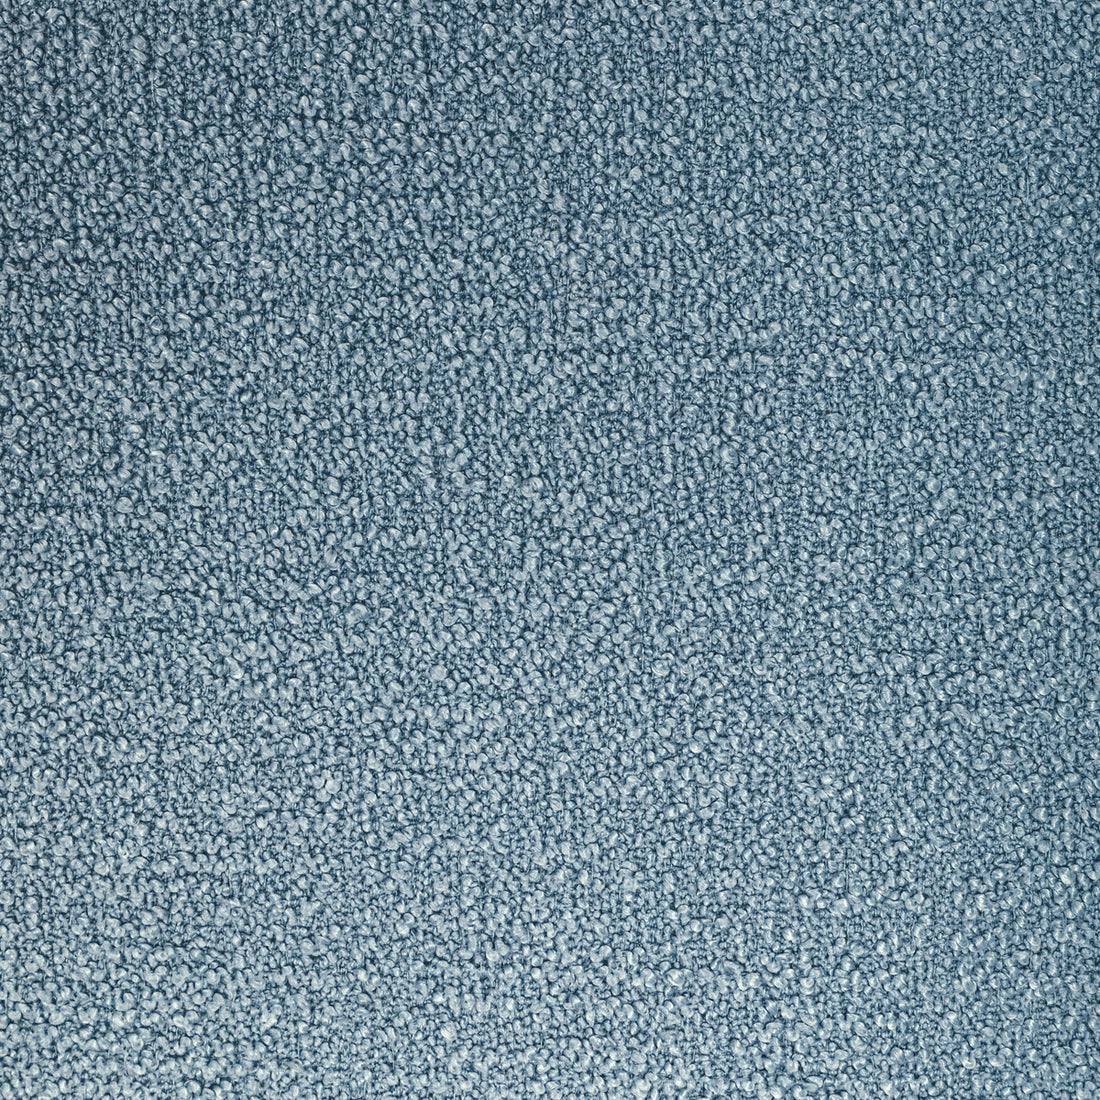 Kravet Smart fabric in 36857-115 color - pattern 36857.115.0 - by Kravet Smart in the Performance Kravetarmor collection